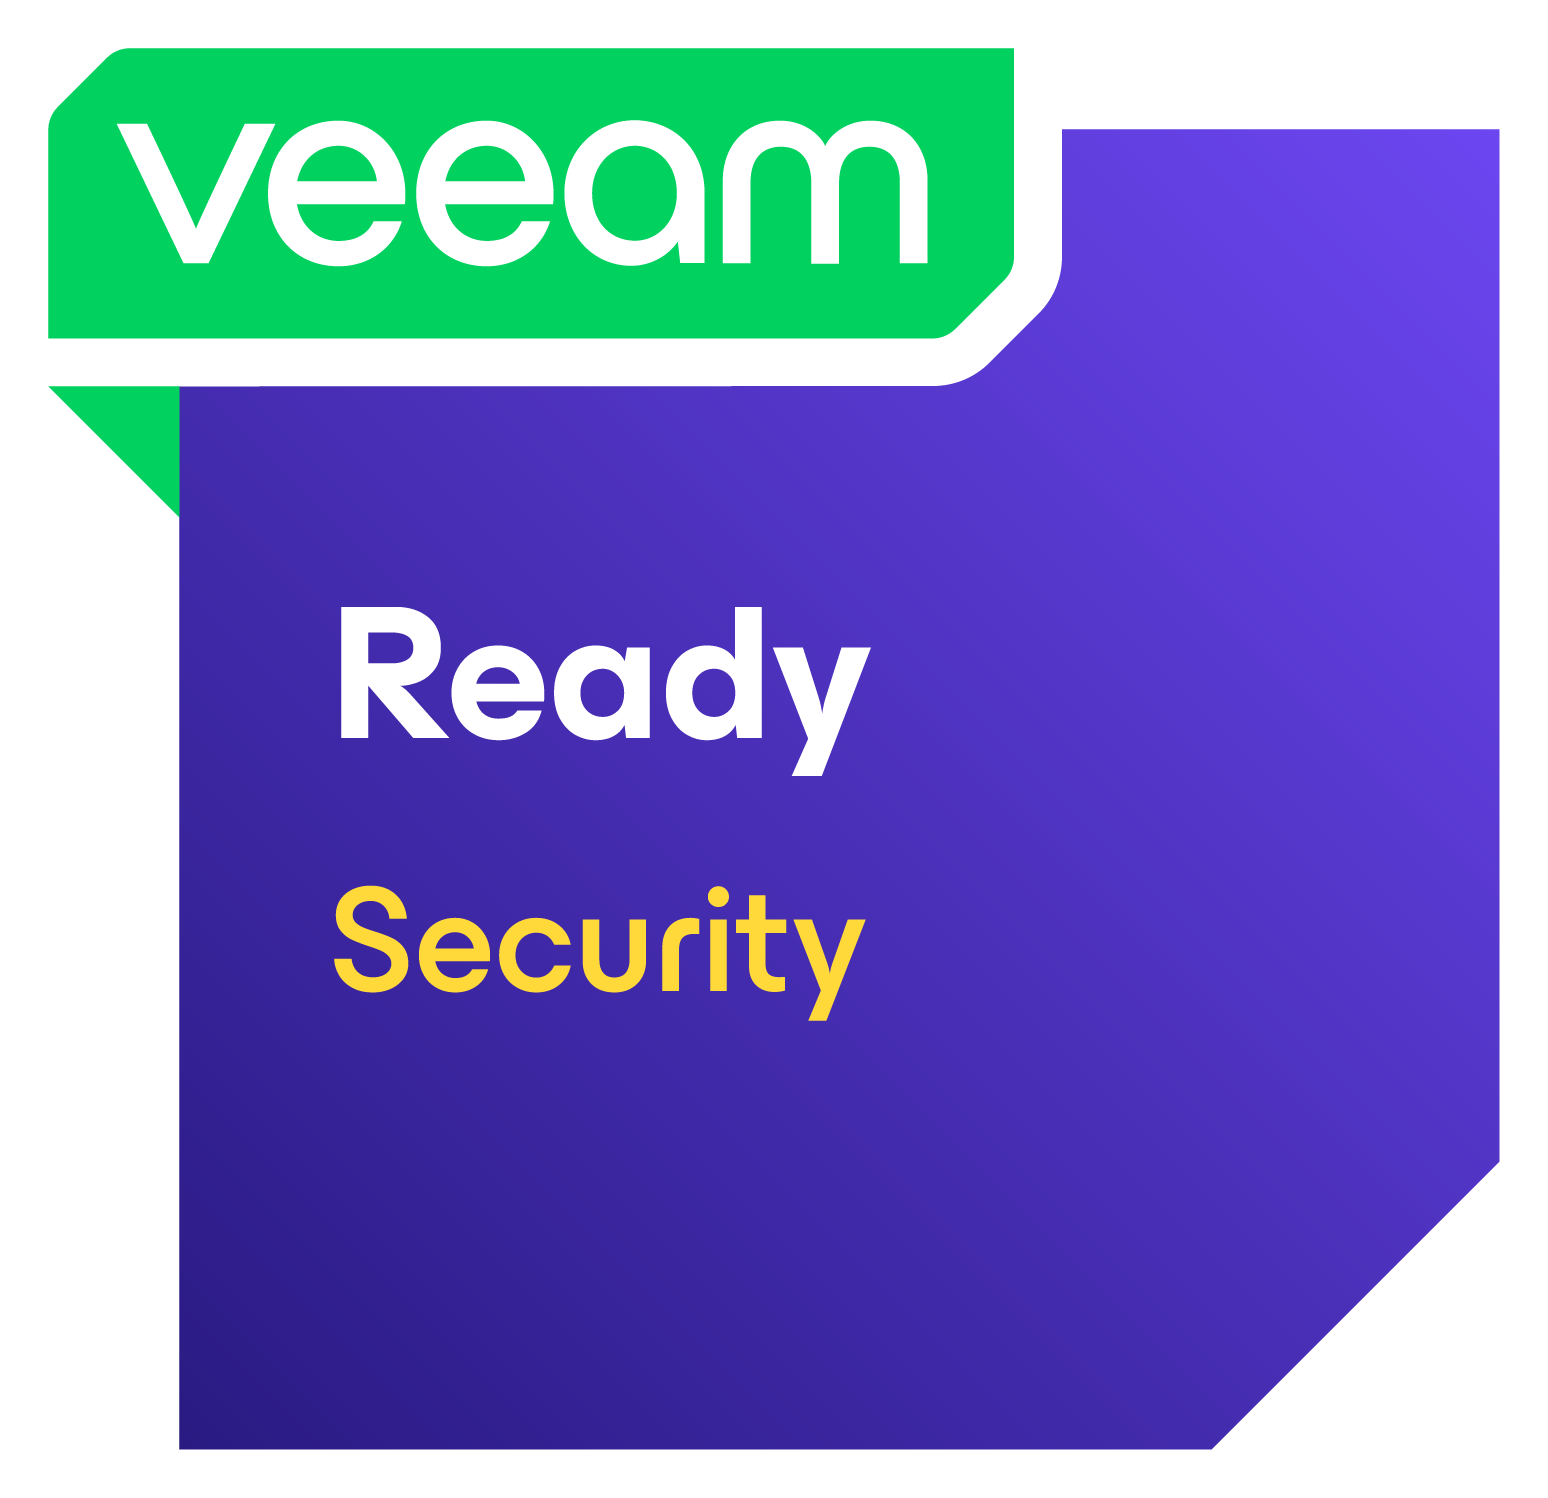 Veeam ready security